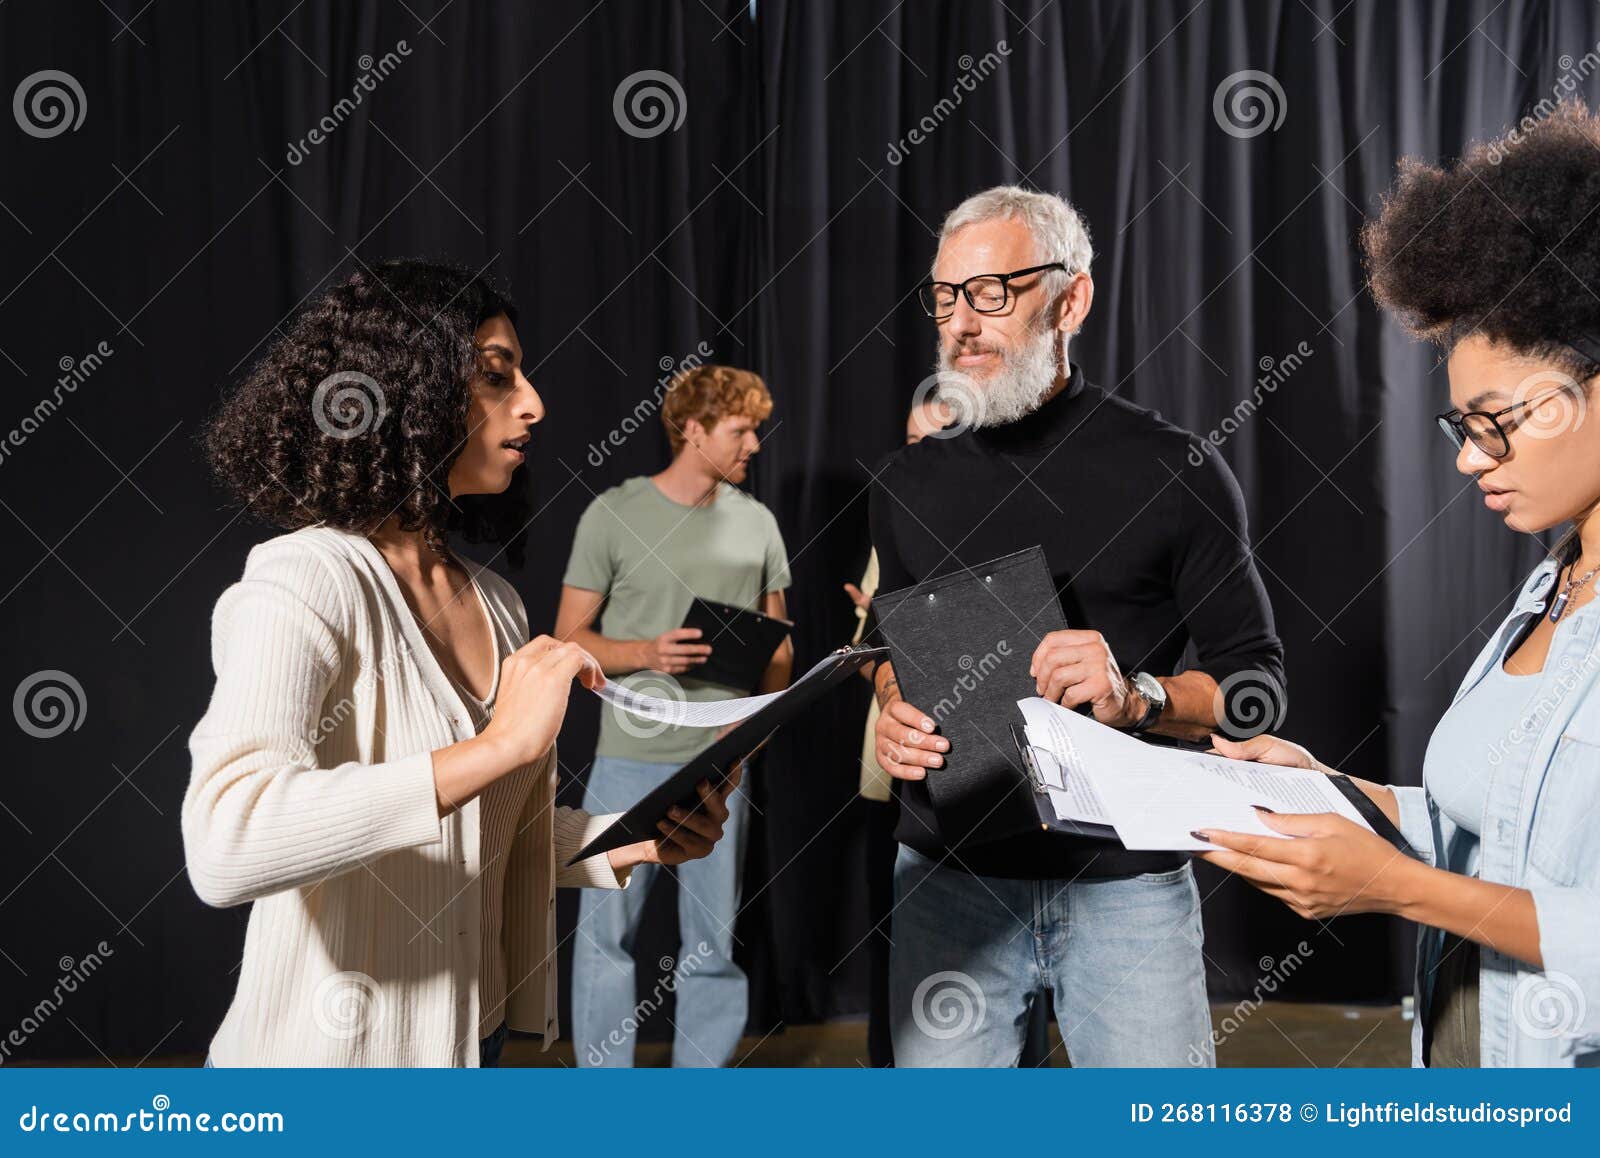 bearded acting skills teacher looking at